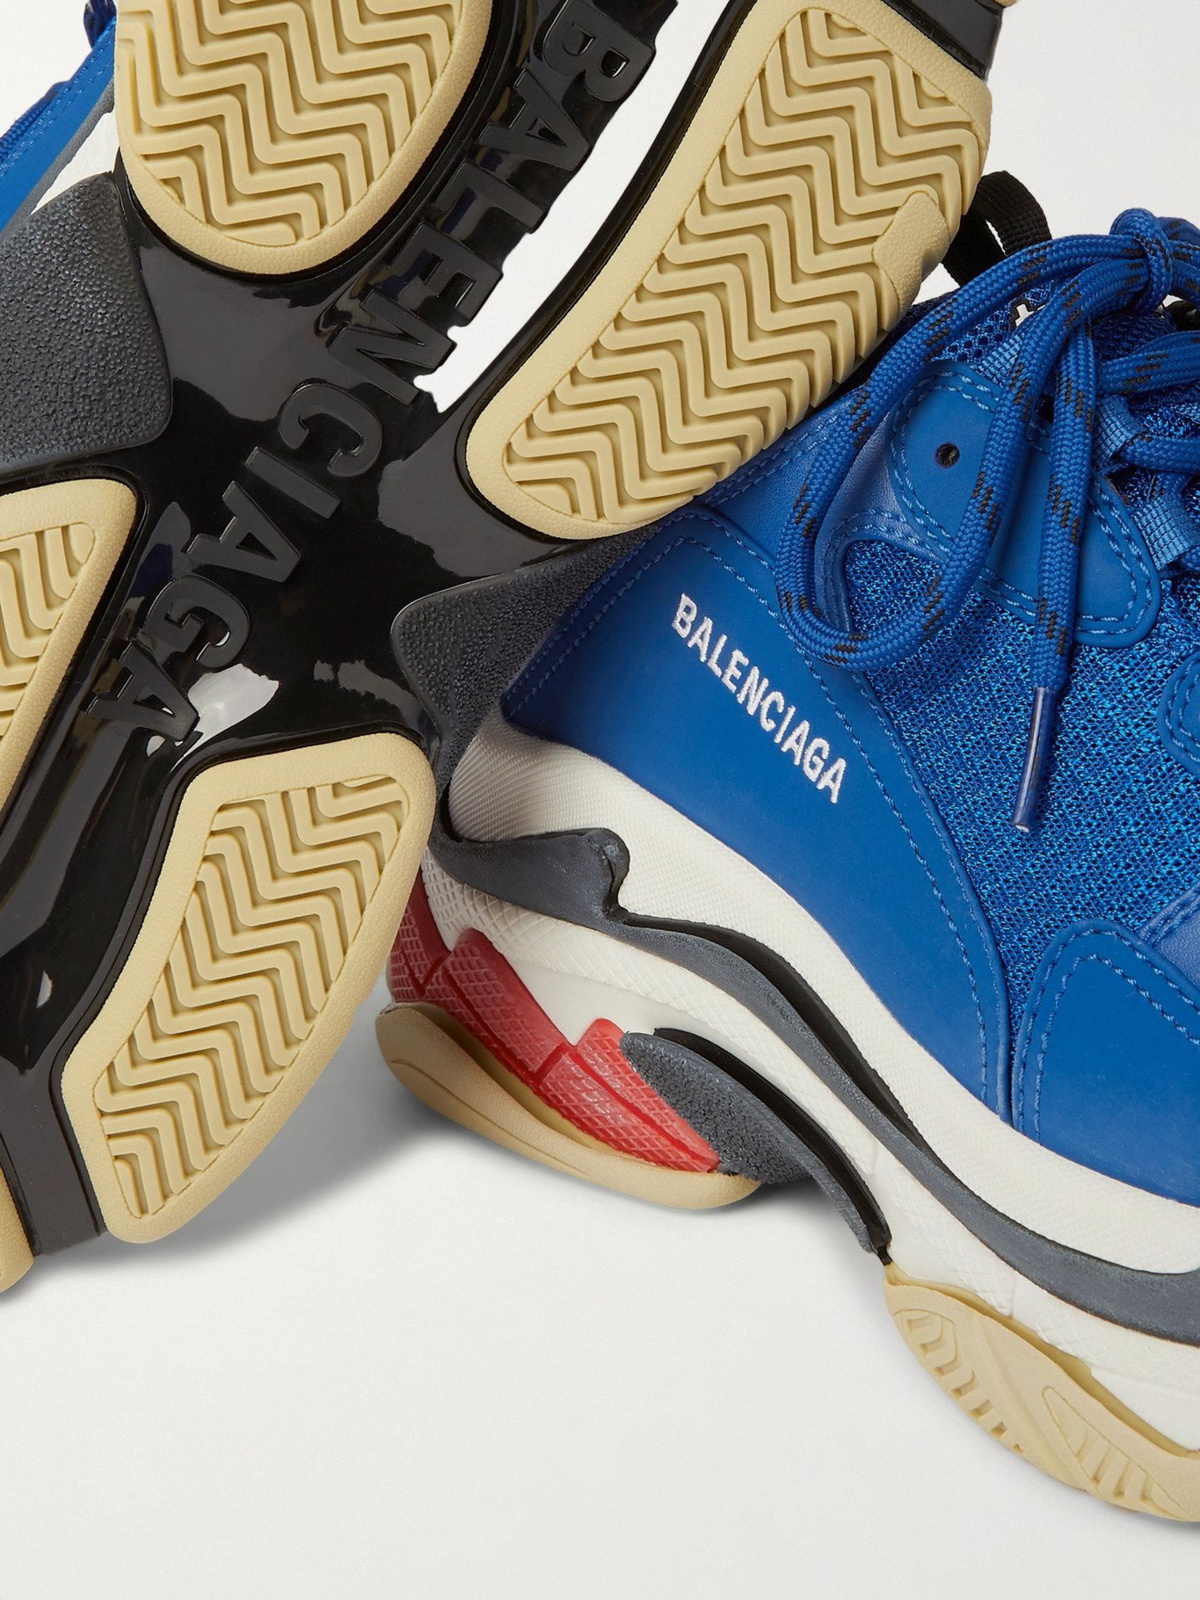 Balenciaga Men's Triple S Mesh %26 Leather Sneakers, Blue